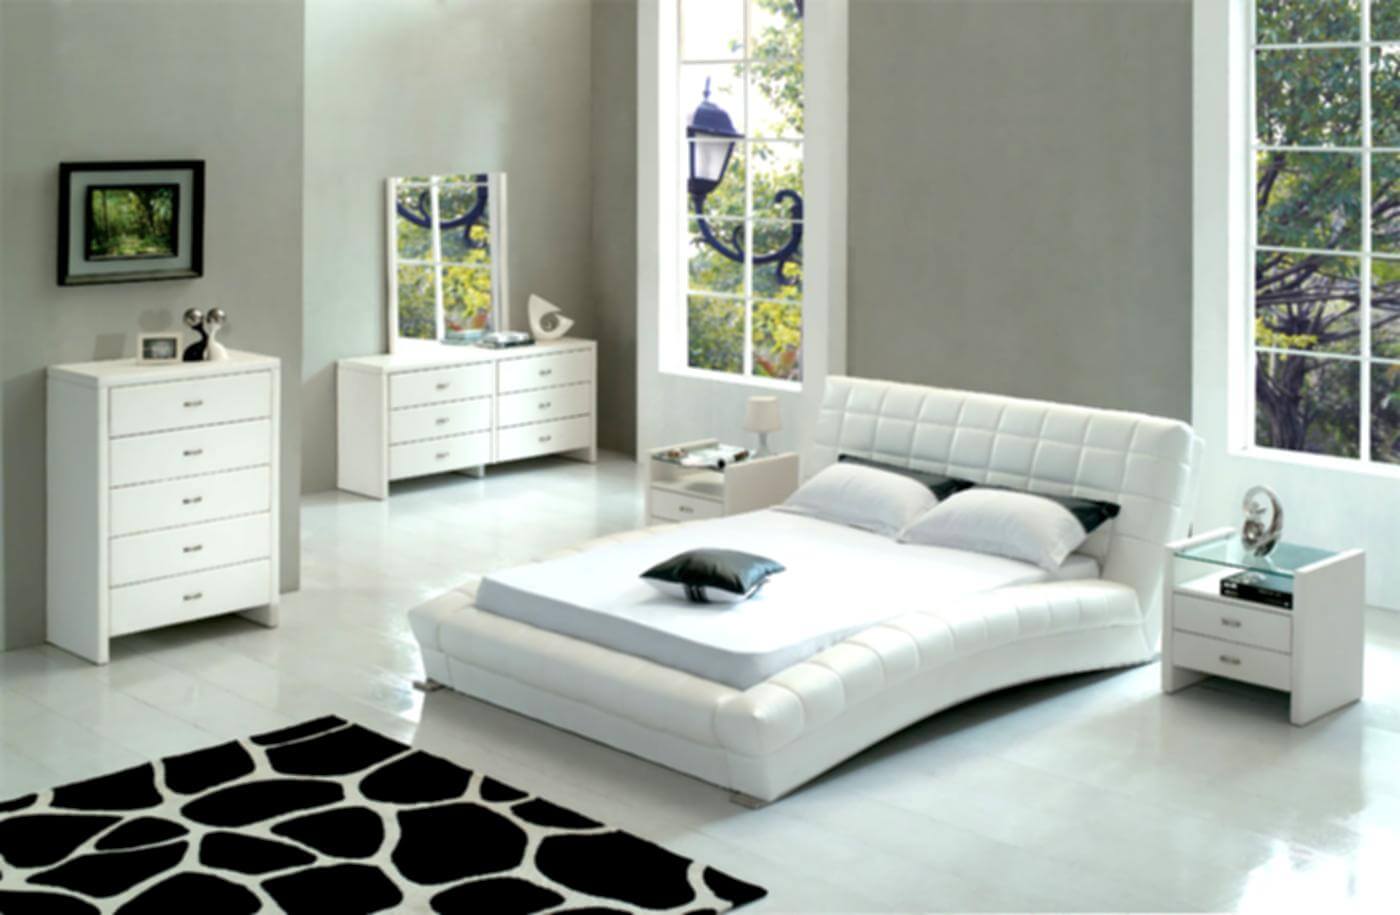 28+ Minimalist Bedroom Design Ideas :: B E D R O O M Images - The ...